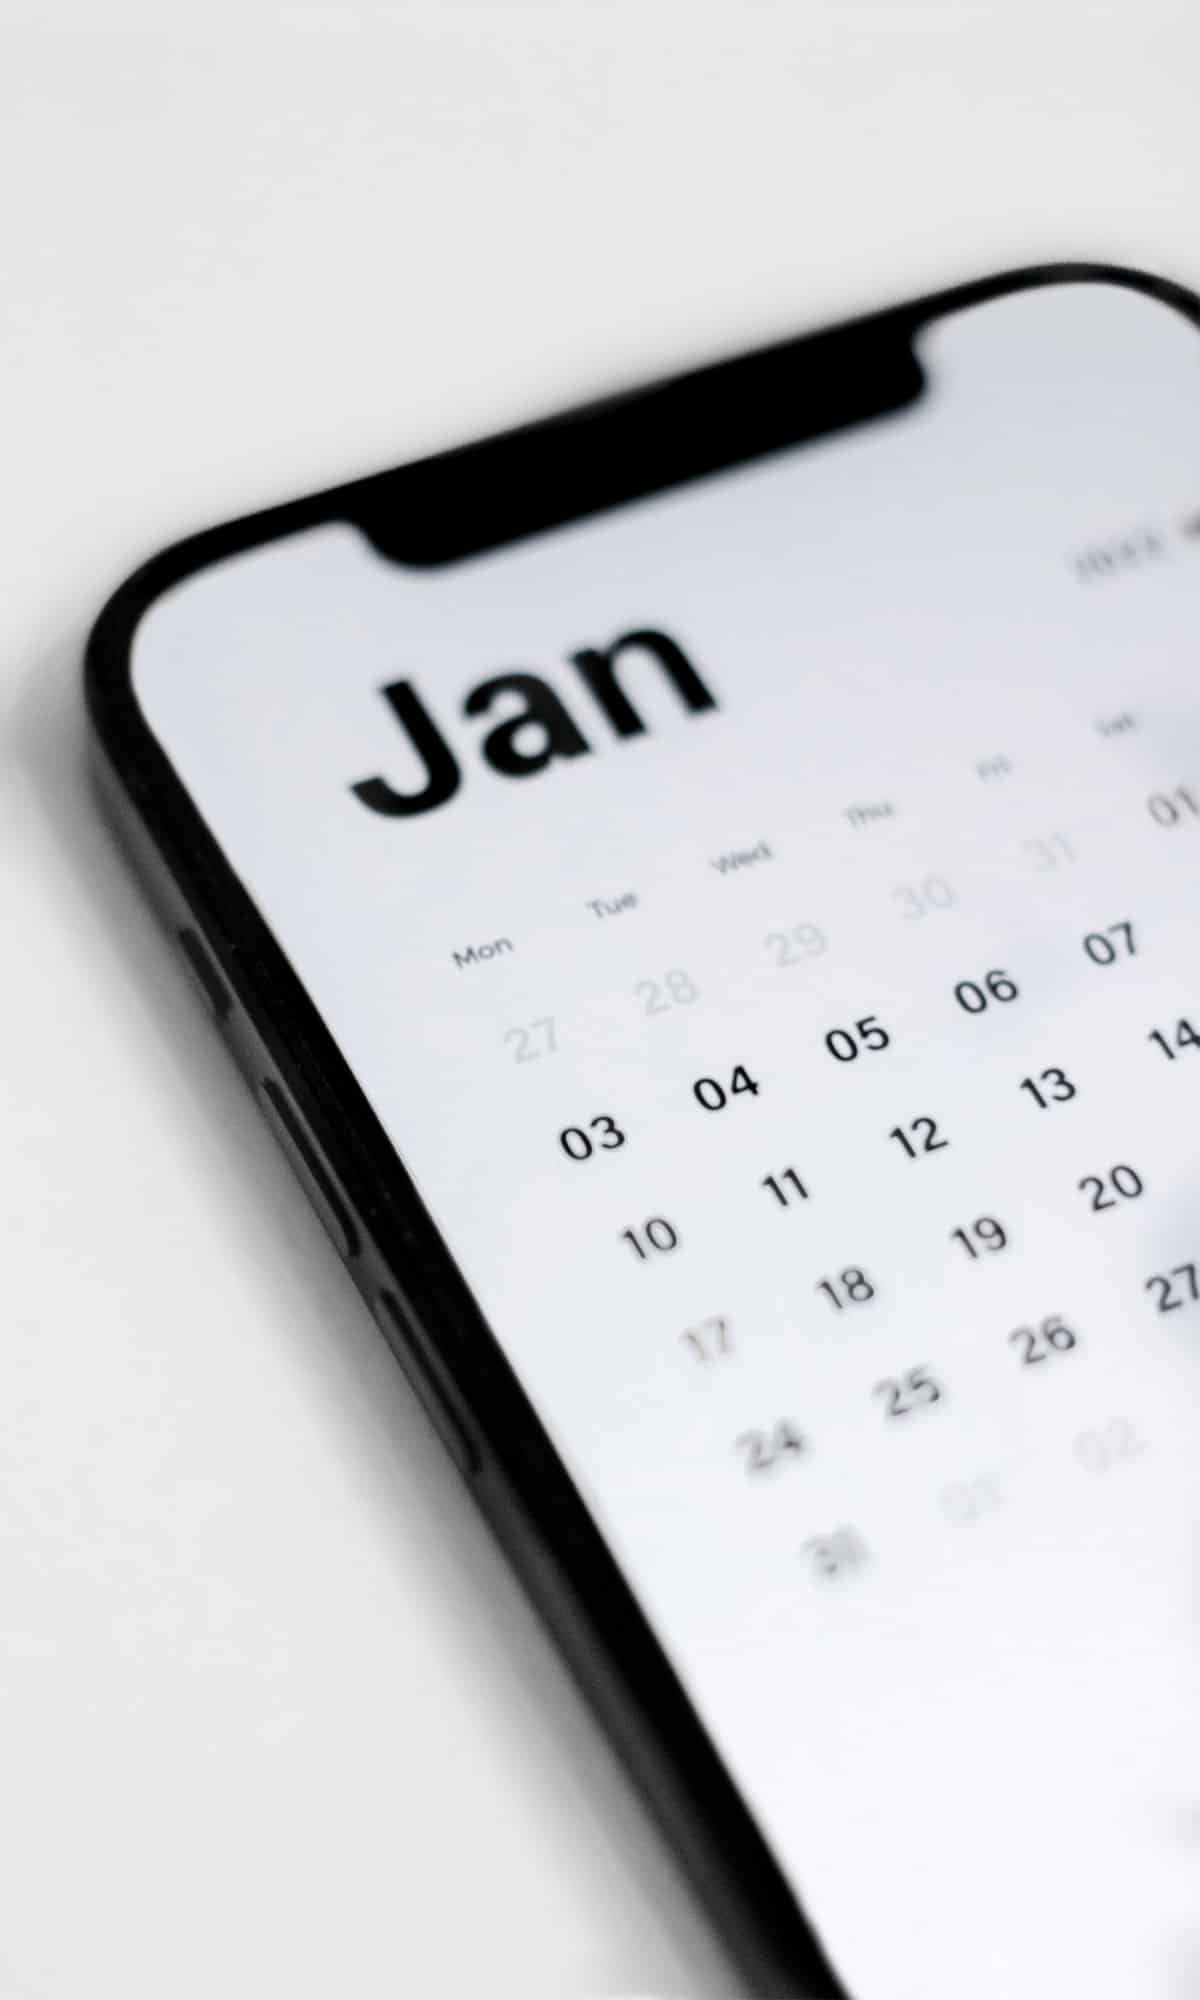 Calendar app on a smartphone